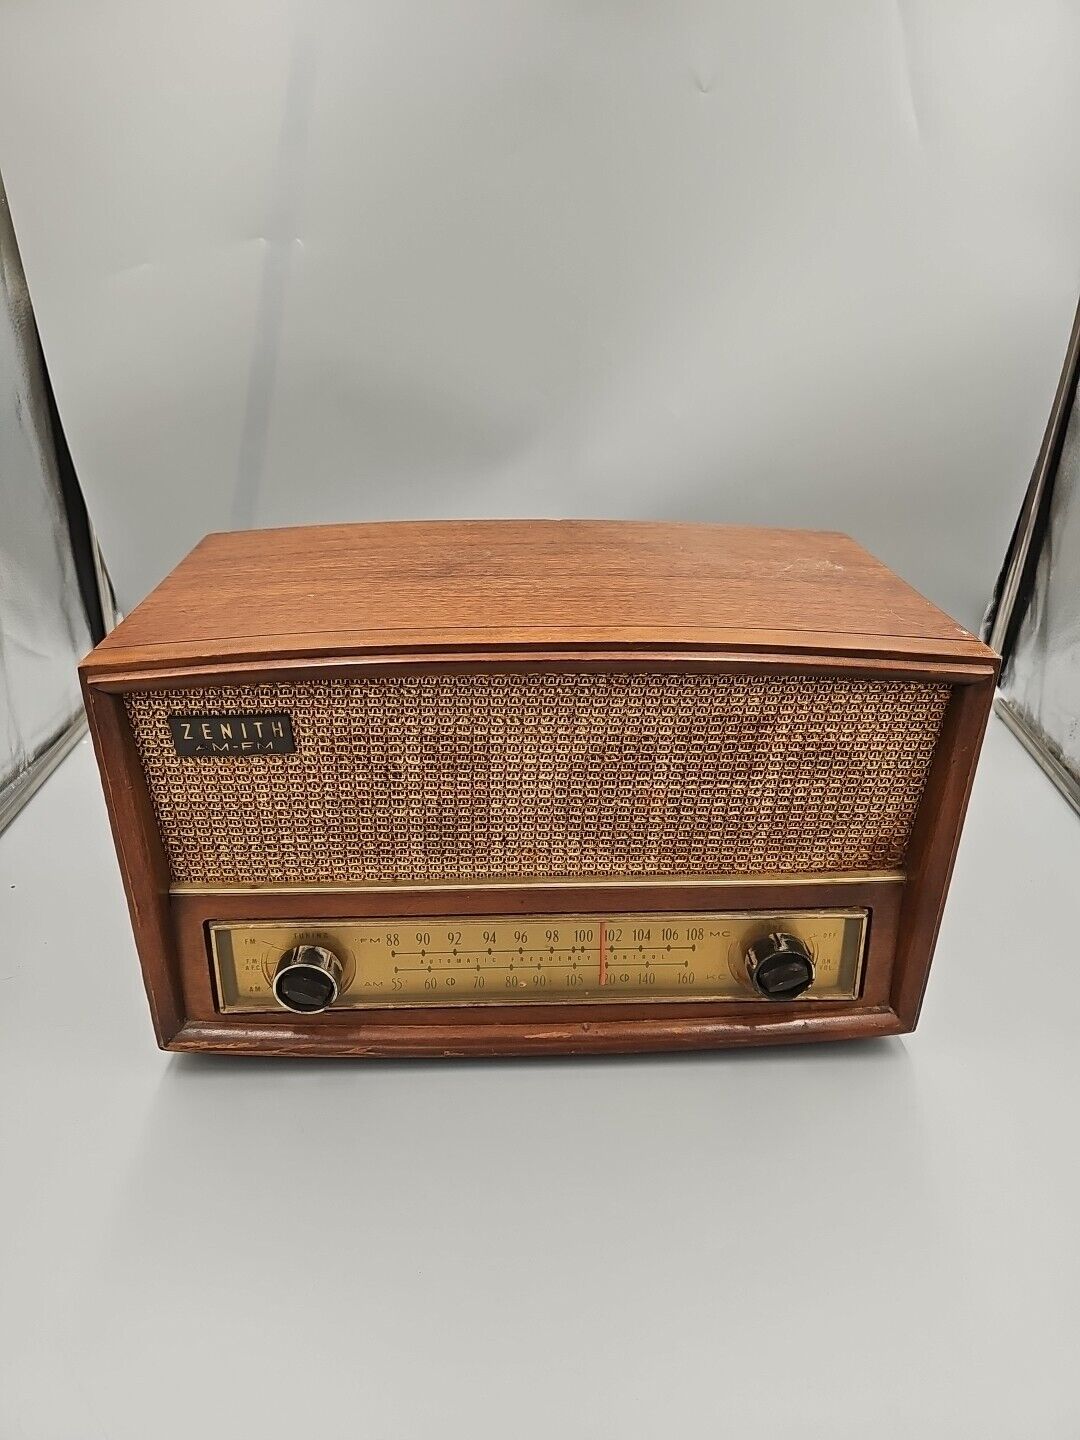 ZENITH VINTAGE 1950s AM/FM Tube Radio With Phono Input Model G730 WORKS